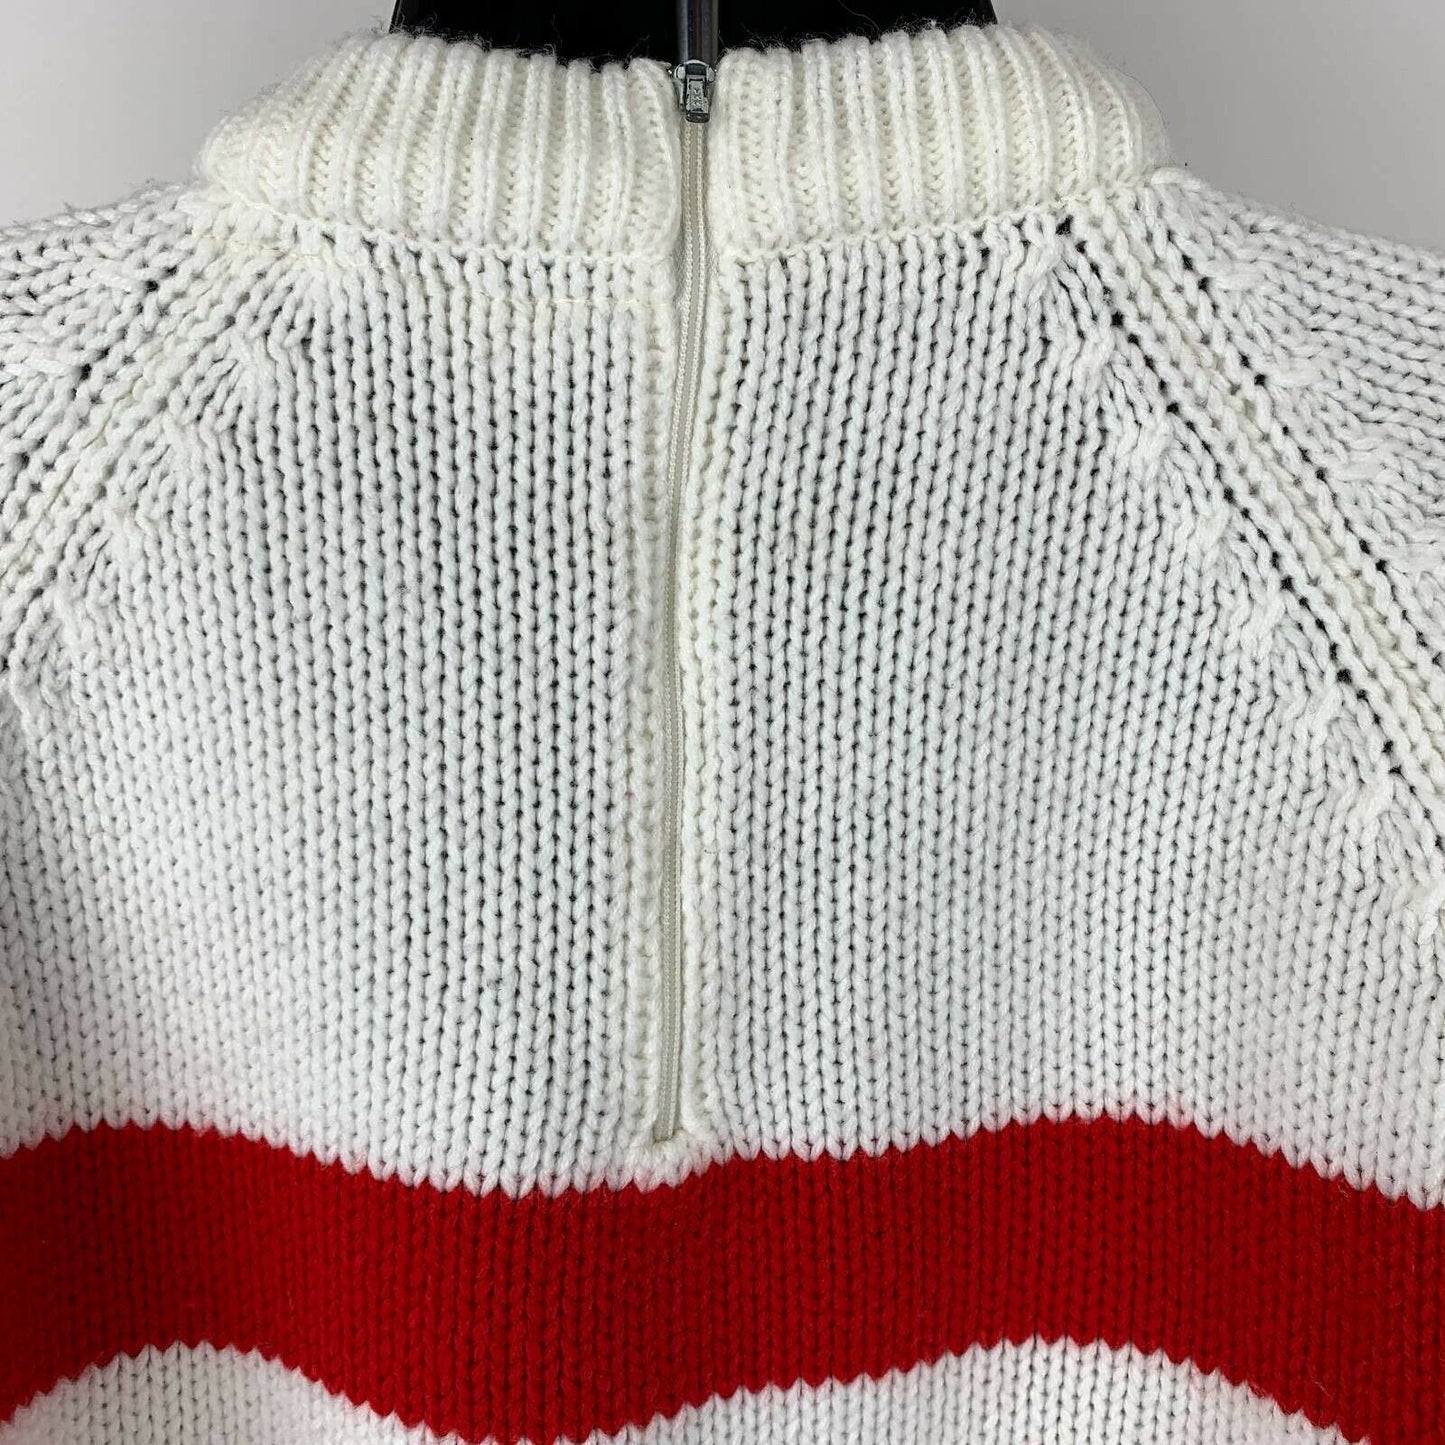 Miss Holly Vintage 60s 70s mujeres pullover suéter rojo blanco geométrico grande